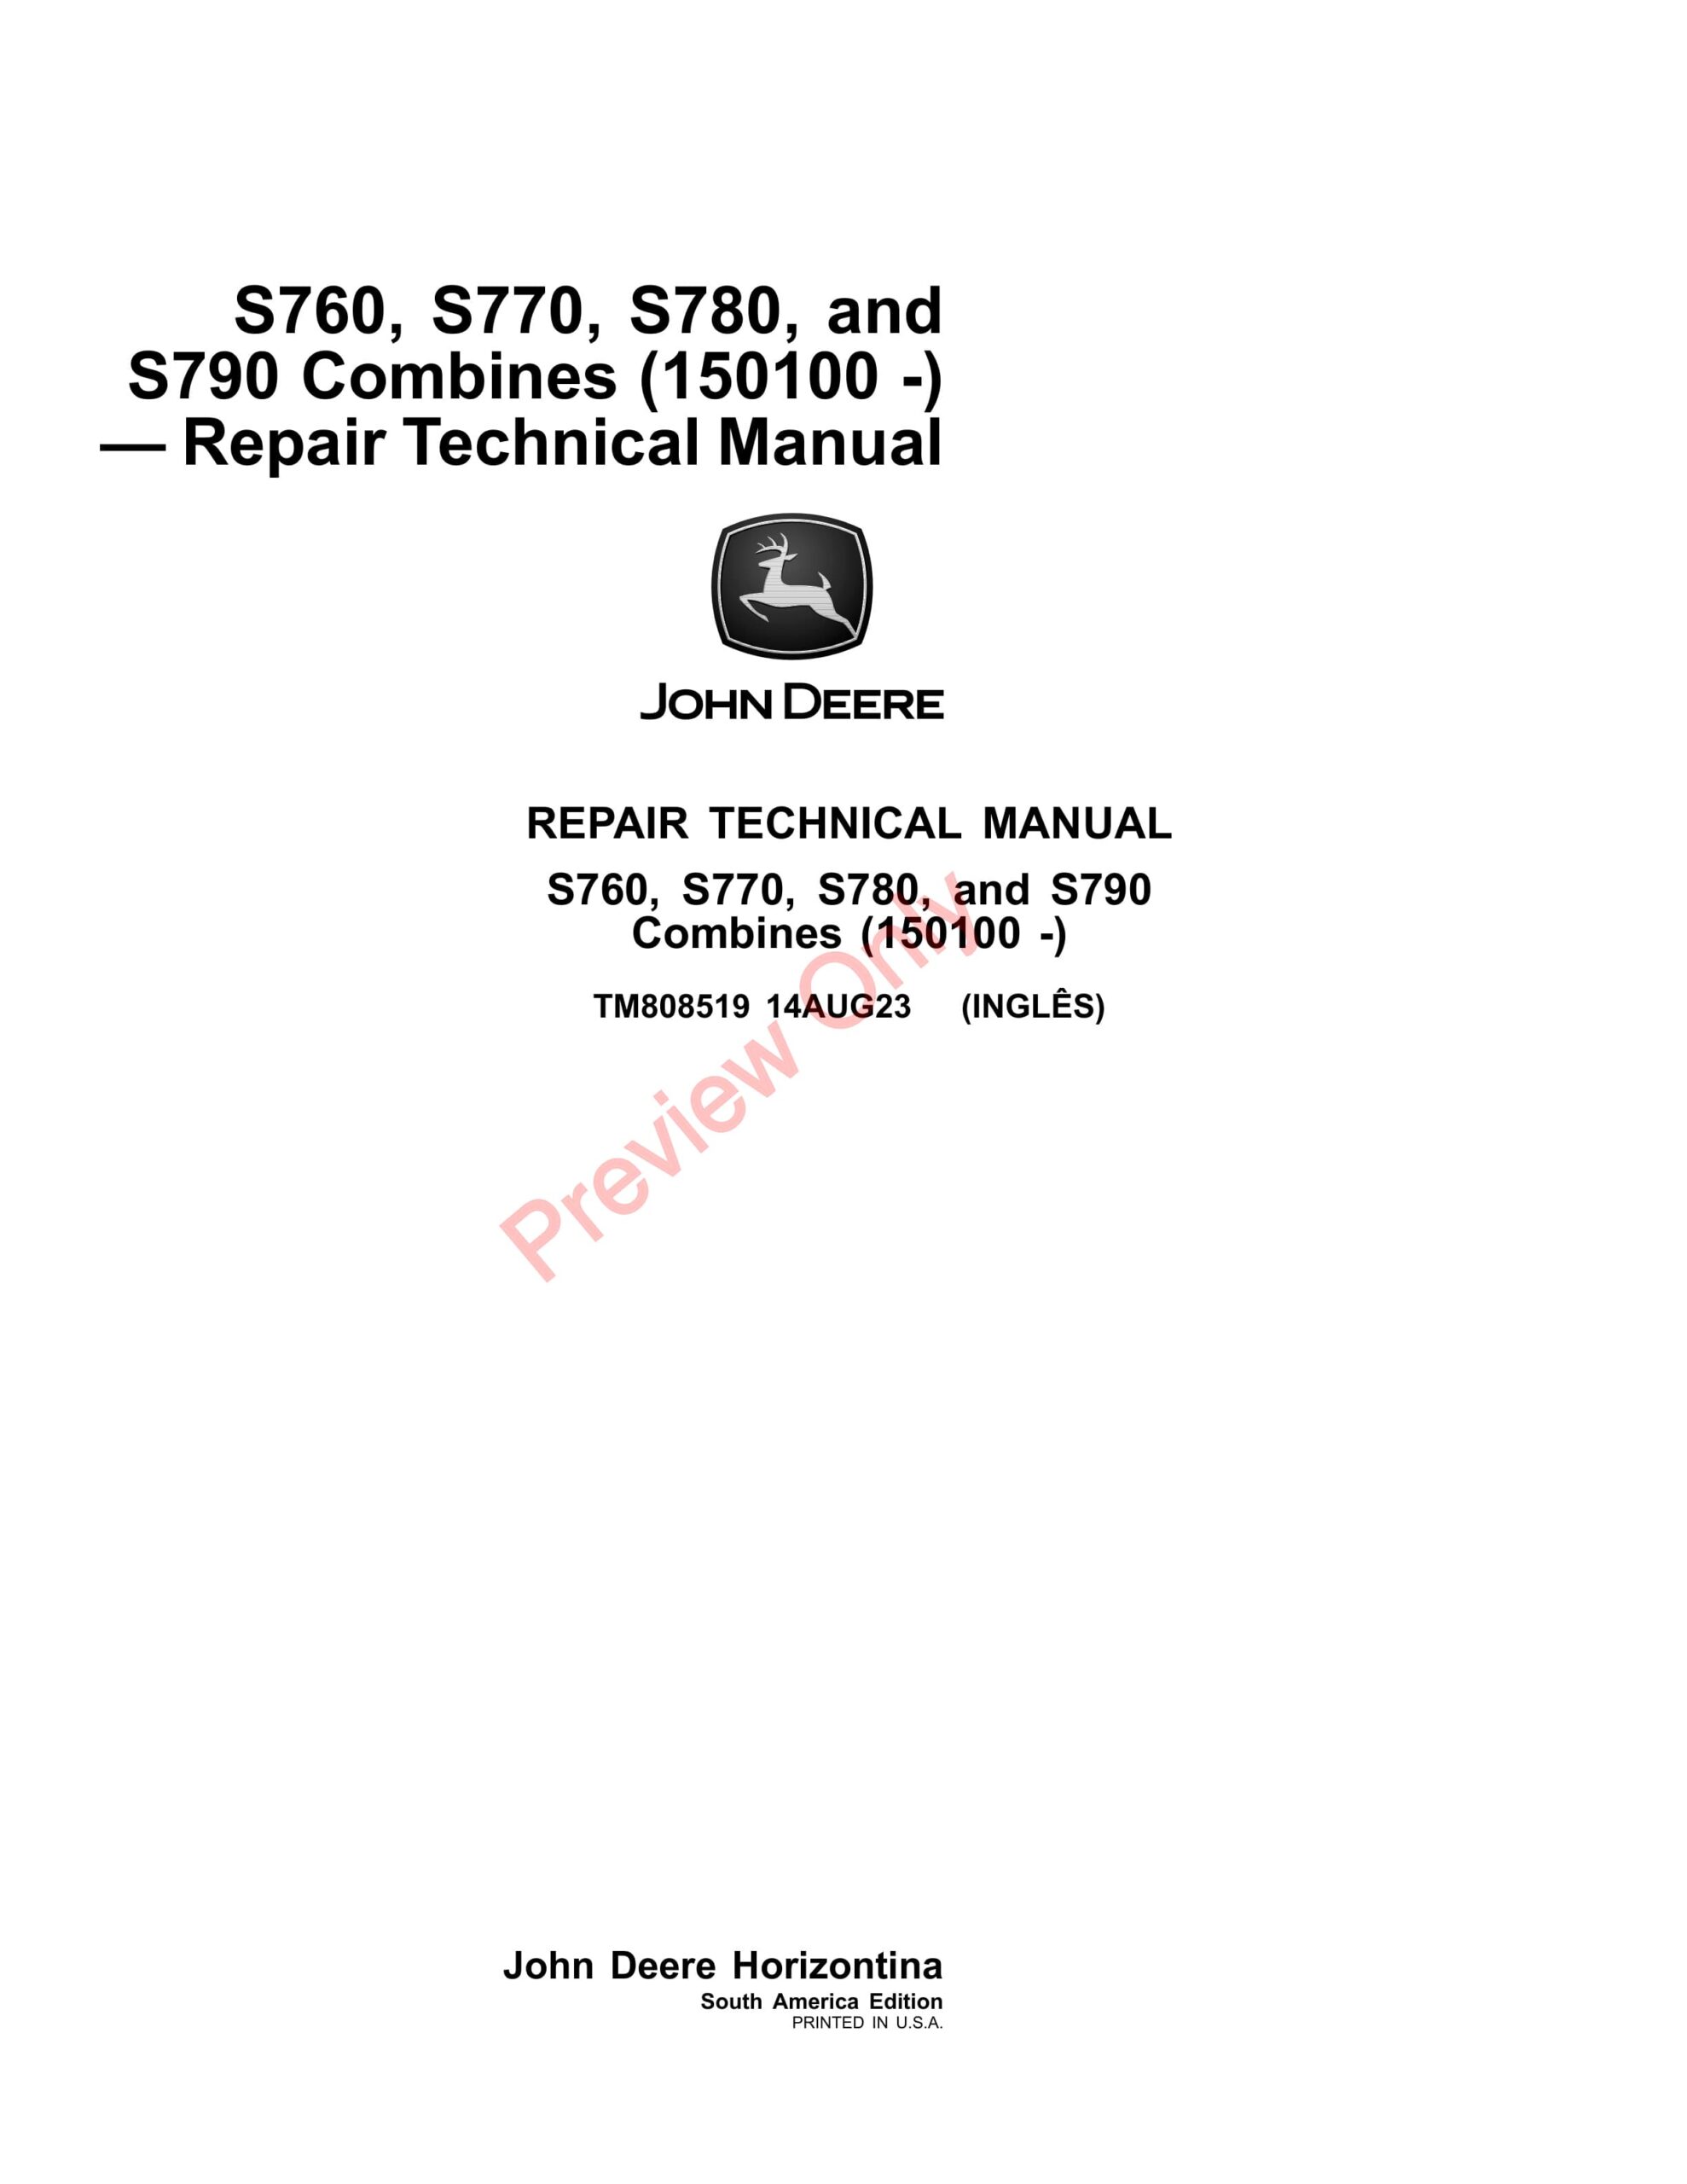 John Deere S760, S770, S780, and S790 Combines (140100 – ) Repair Technical Manual TM808519 14AUG23-1